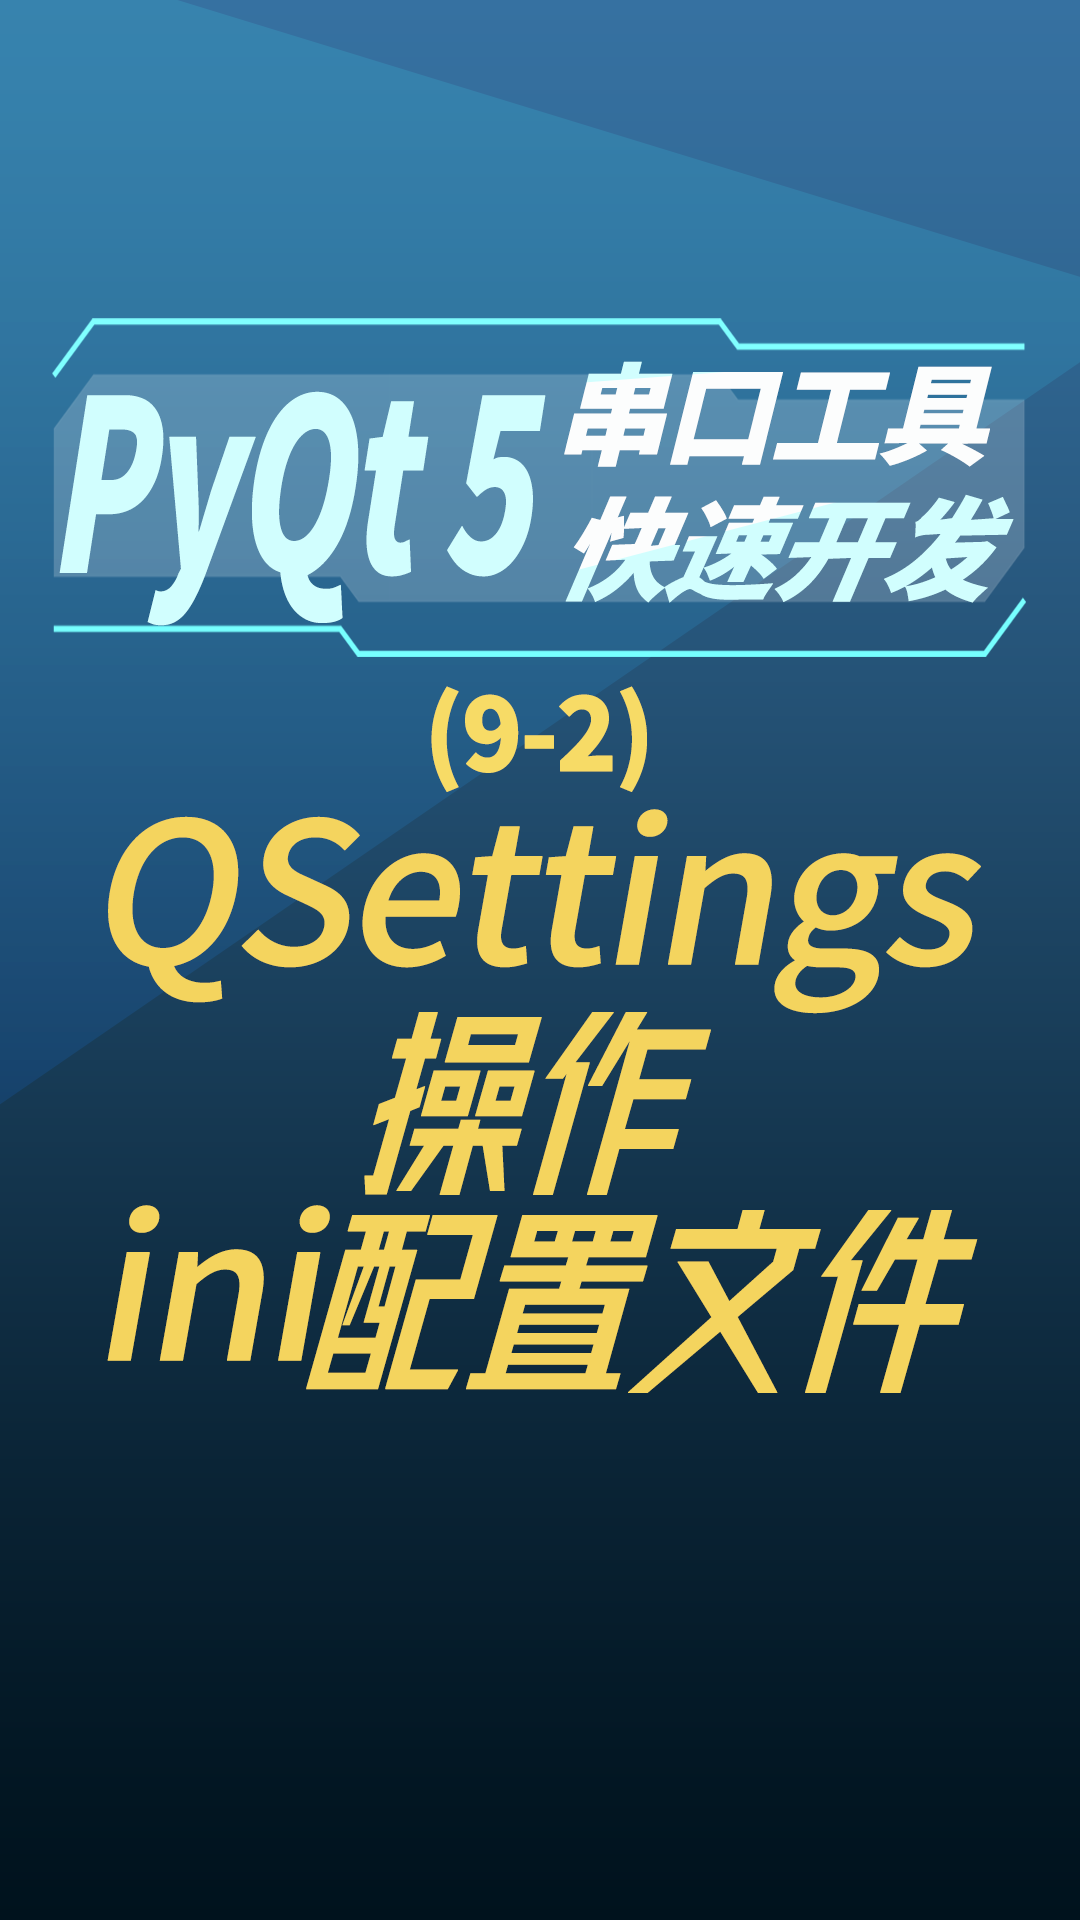 pyqt5串口工具快速开发9-2QSettings操作ini配置文件#串口工具开发 